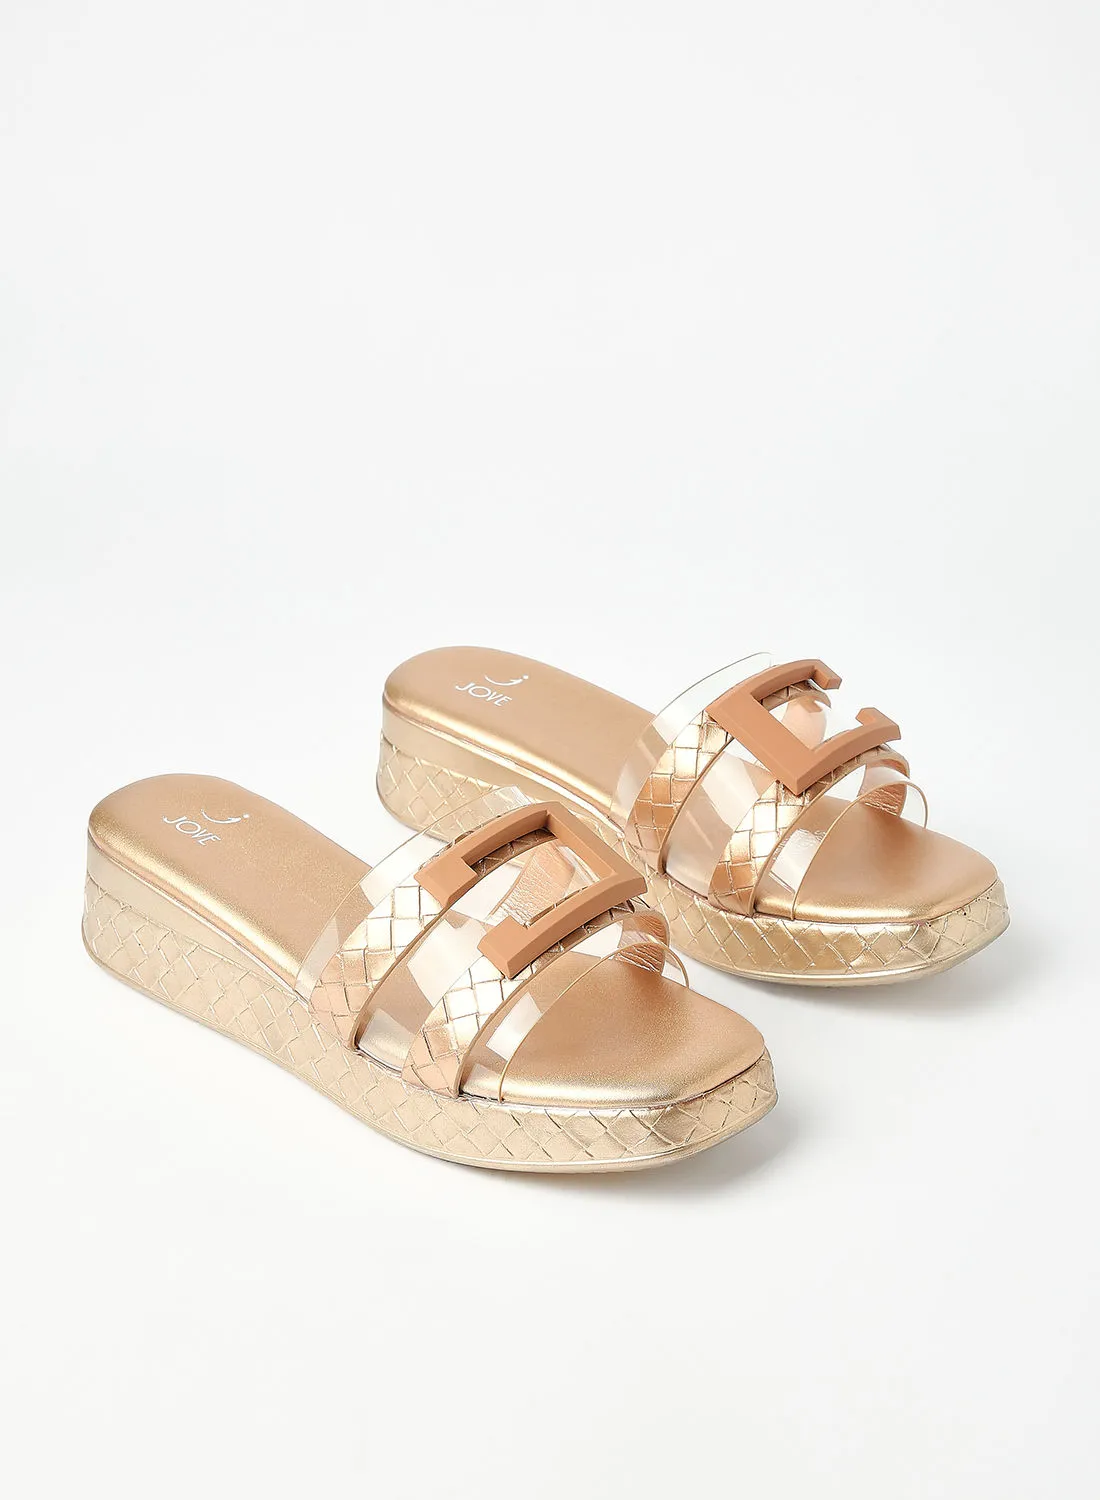 Jove Stylish Comfortable Platform Sandals Gold